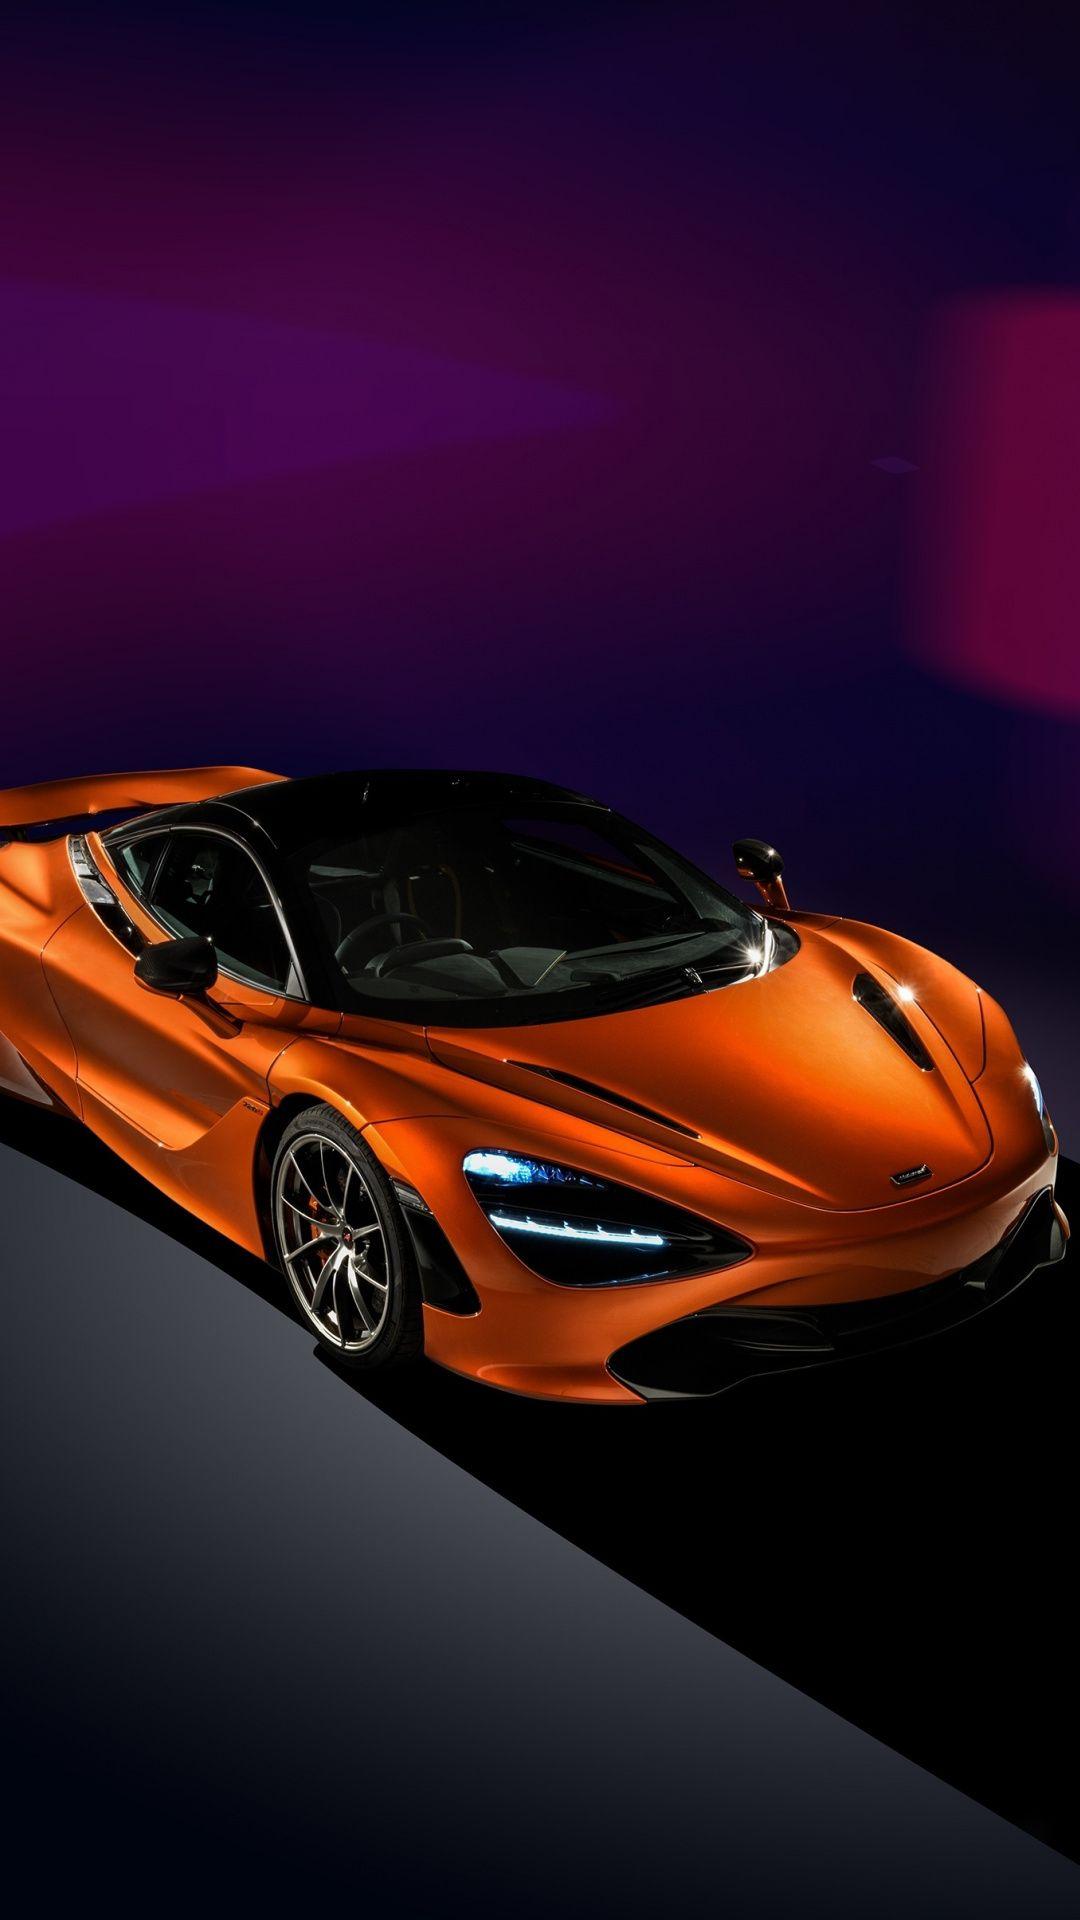 McLaren 720S, sports car, orange, 1080x1920 wallpaper. Sports car, Car iphone wallpaper, Super cars